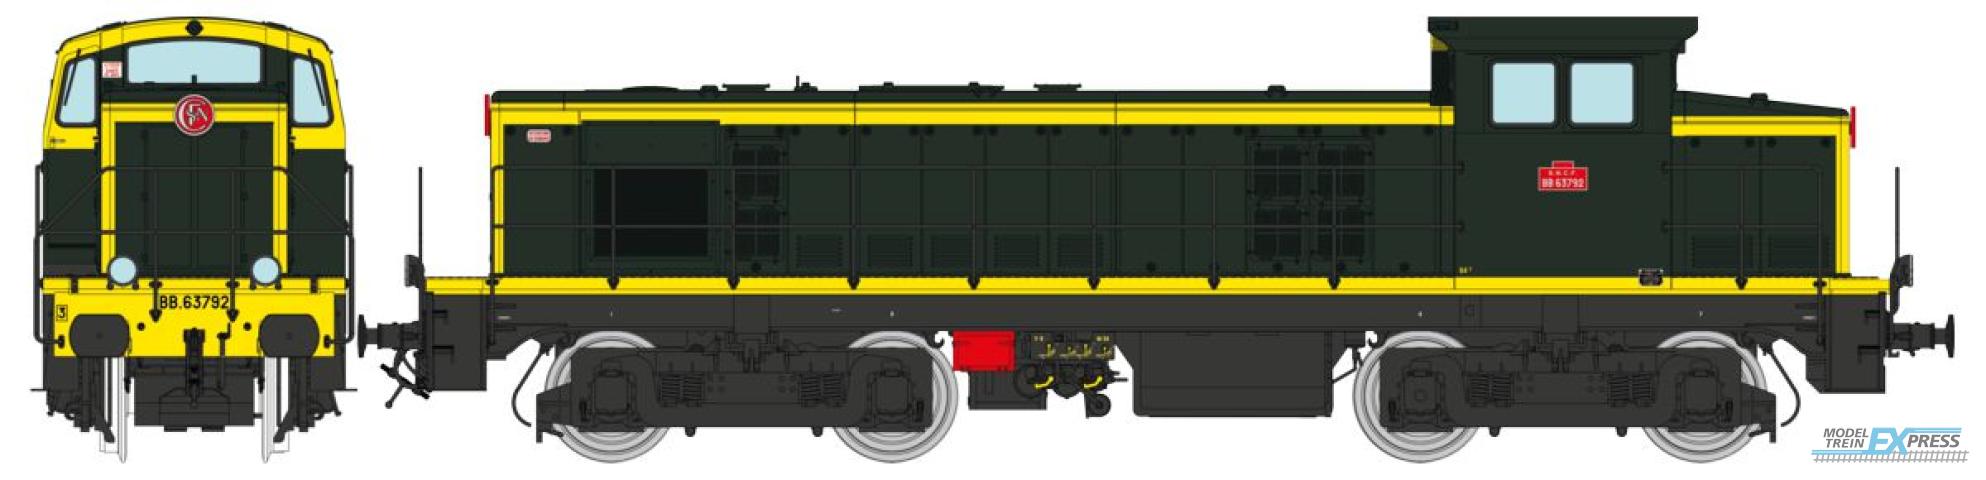 REE models JM-008 Diesel Locomotive BB 63792 green/yellow 401 black frame, West, Era  III - ANALOG